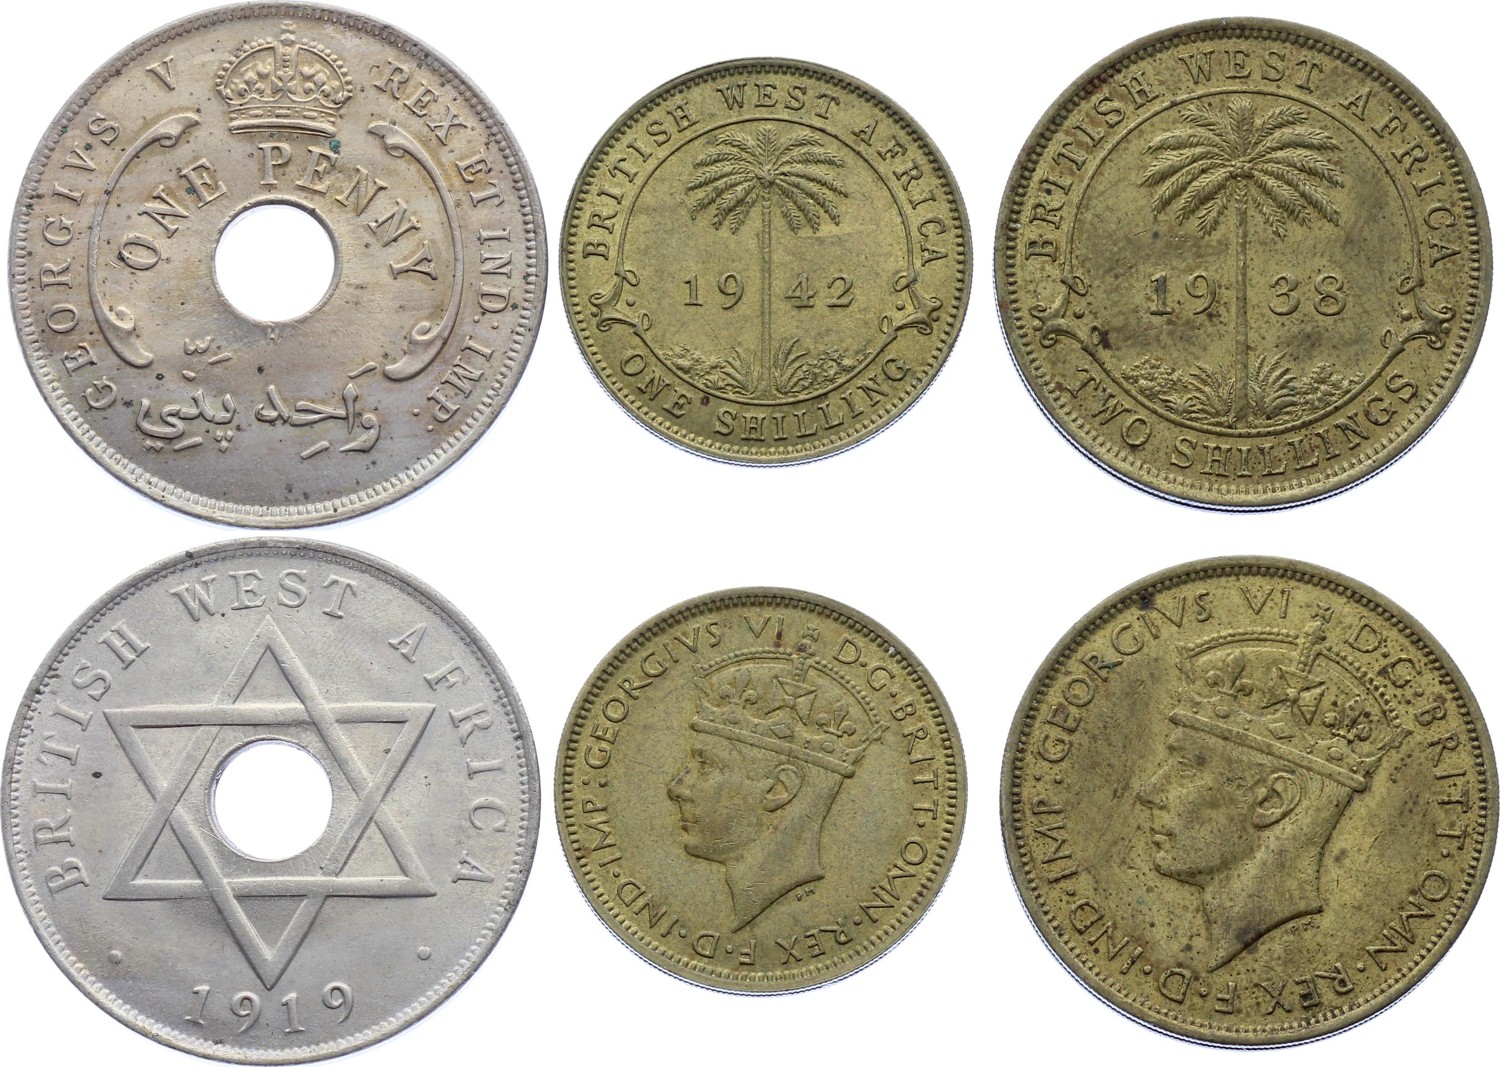 British West Africa Coin Lot